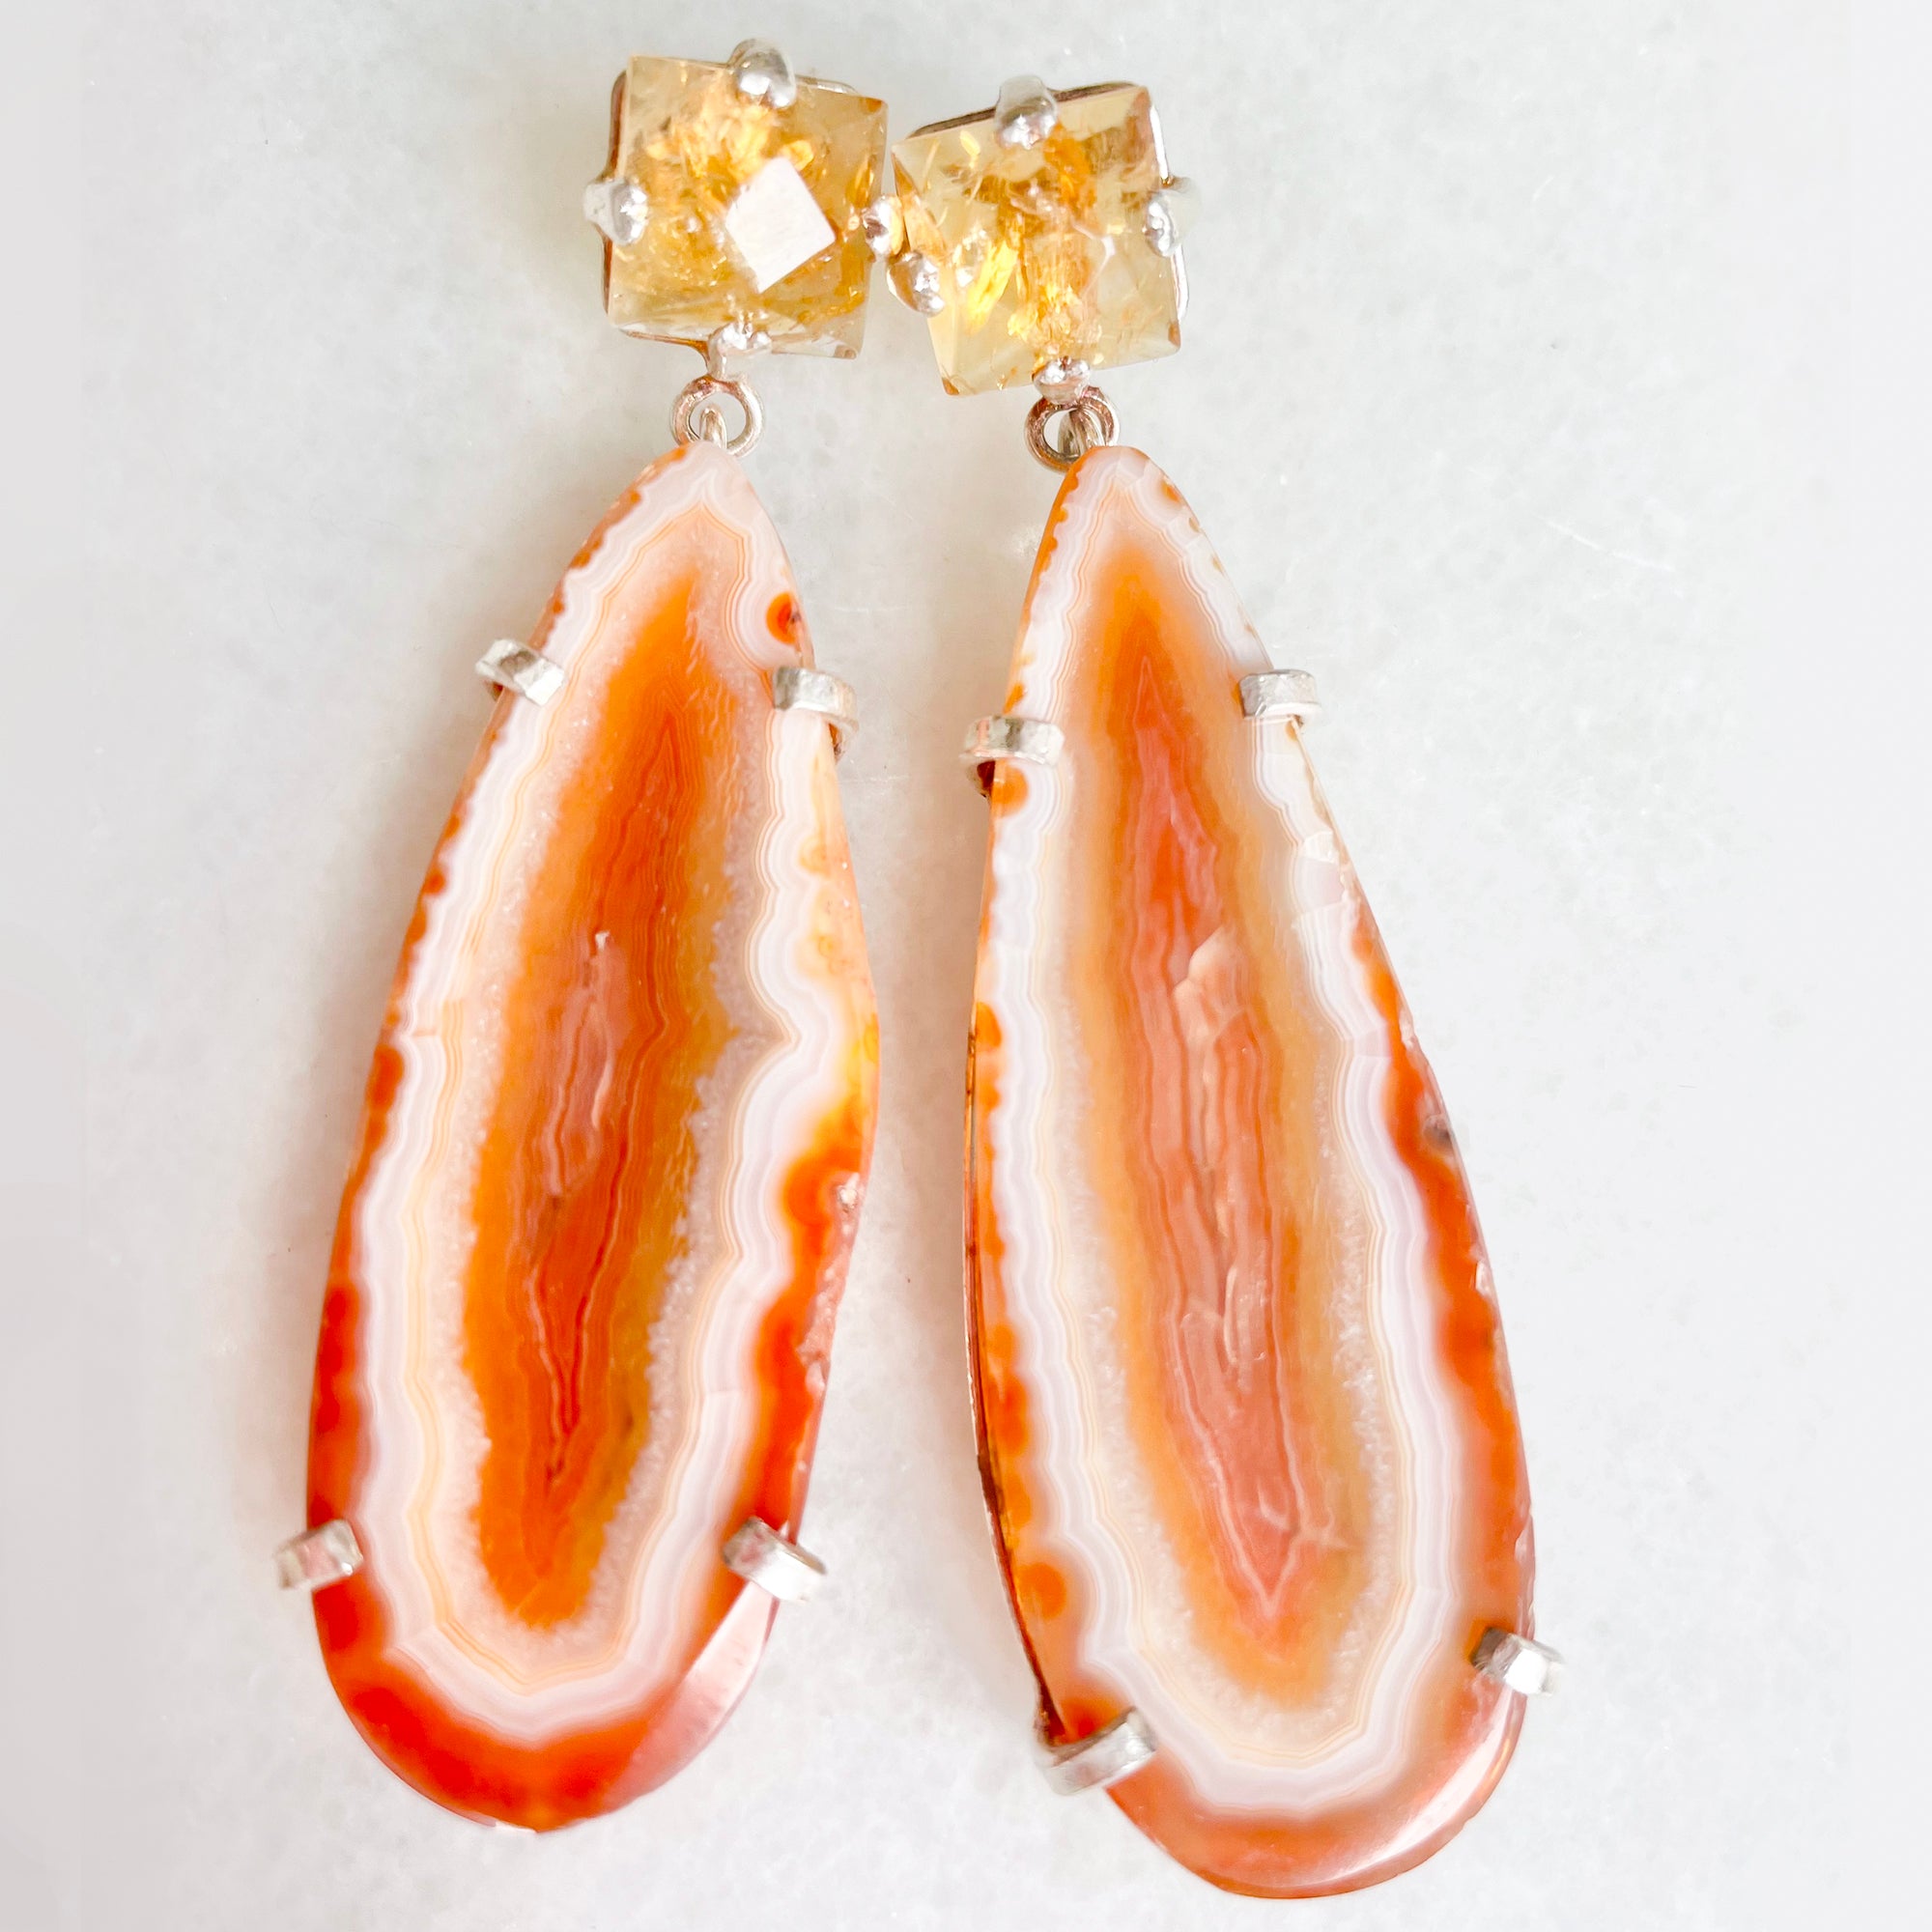 Agate Slice Earrings - Orange